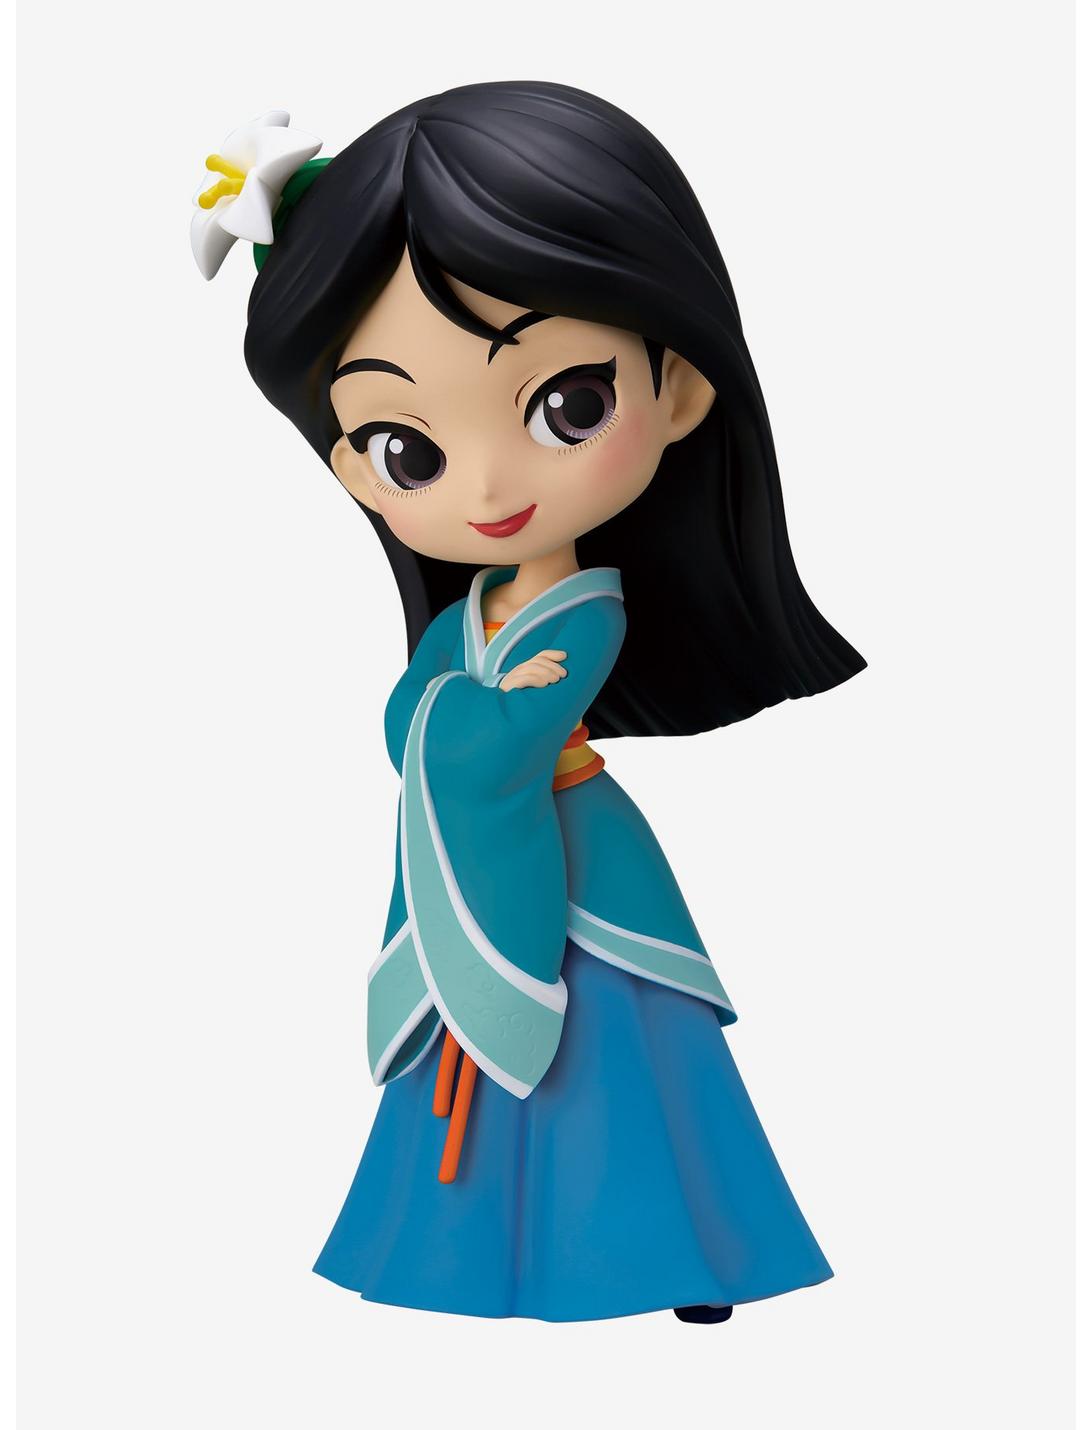 w/ Tracking NEW BANPRESTO Q posket Disney Characters Mulan Normal color Ver